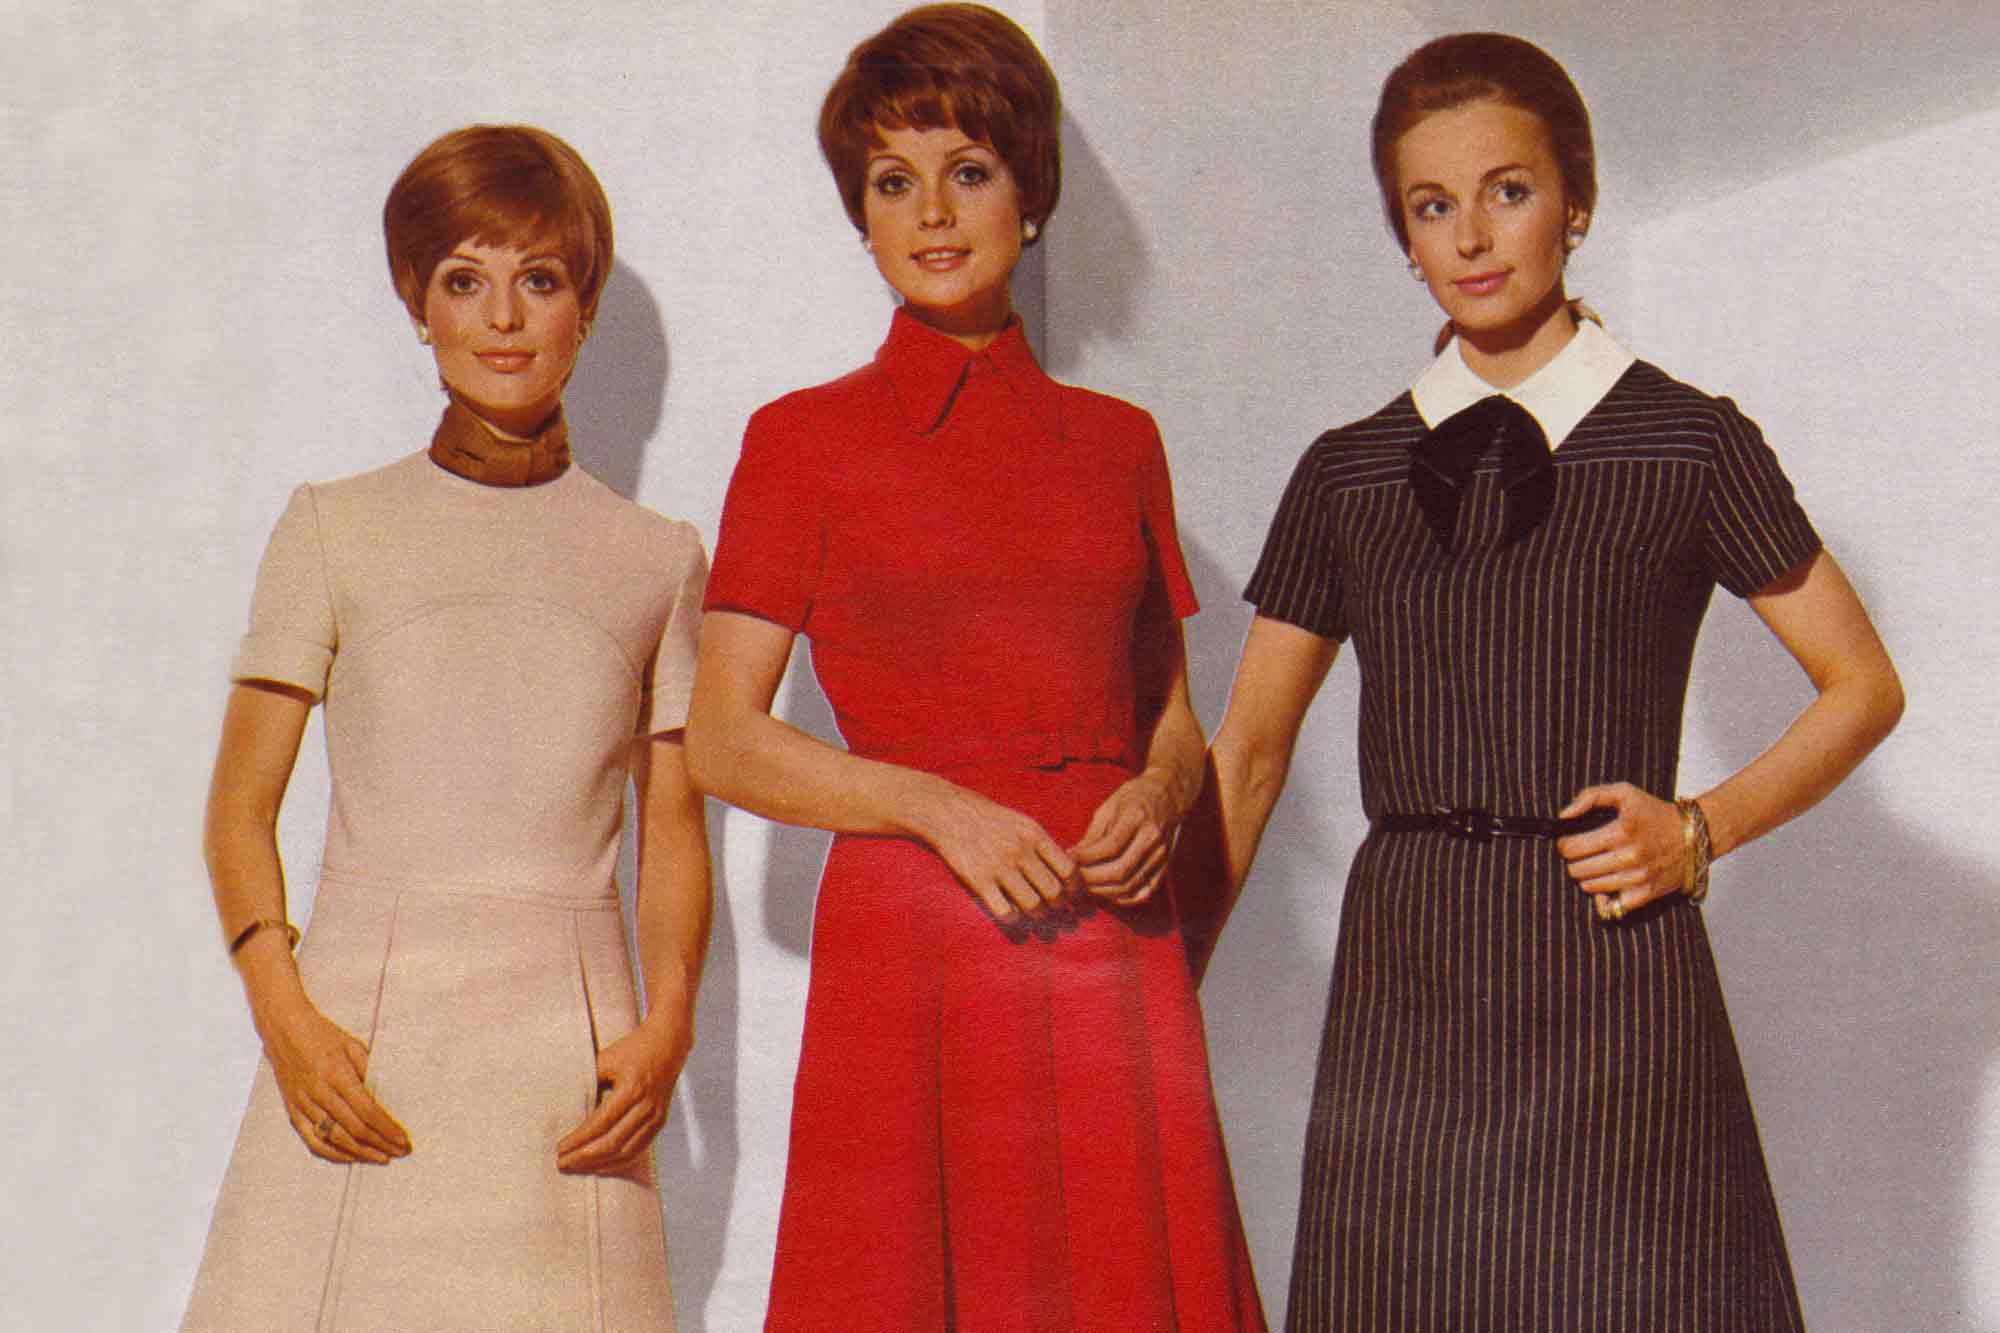 How to dress like the 1960s?